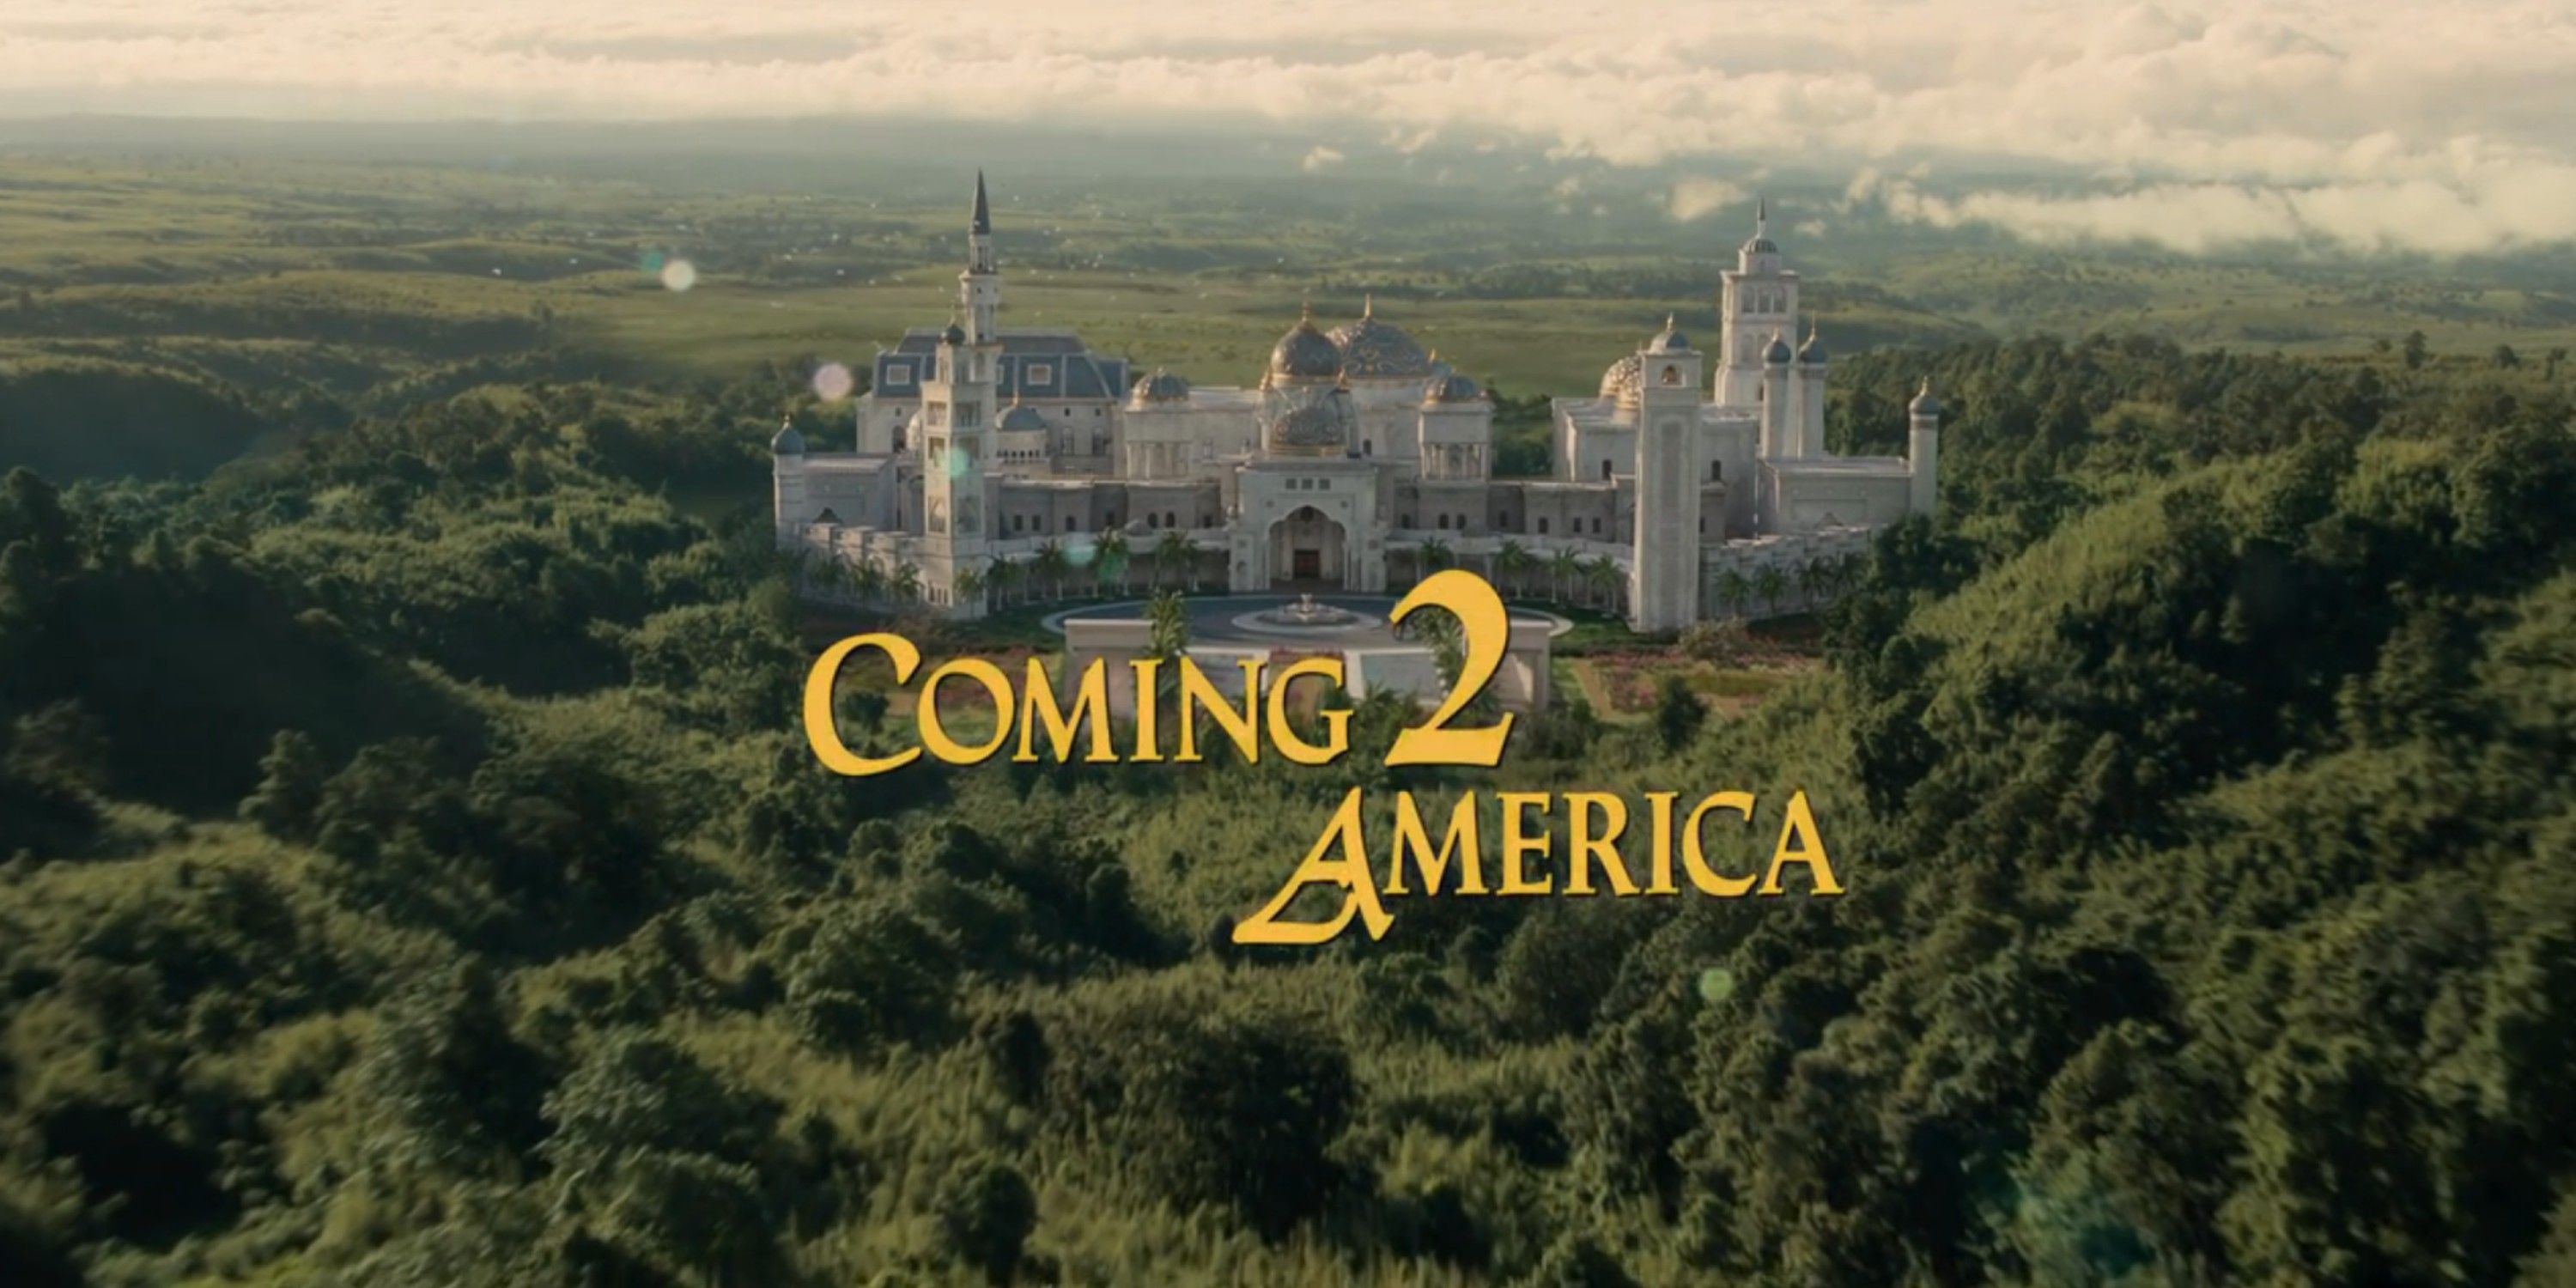 Coming 2 America on Amazon Prime